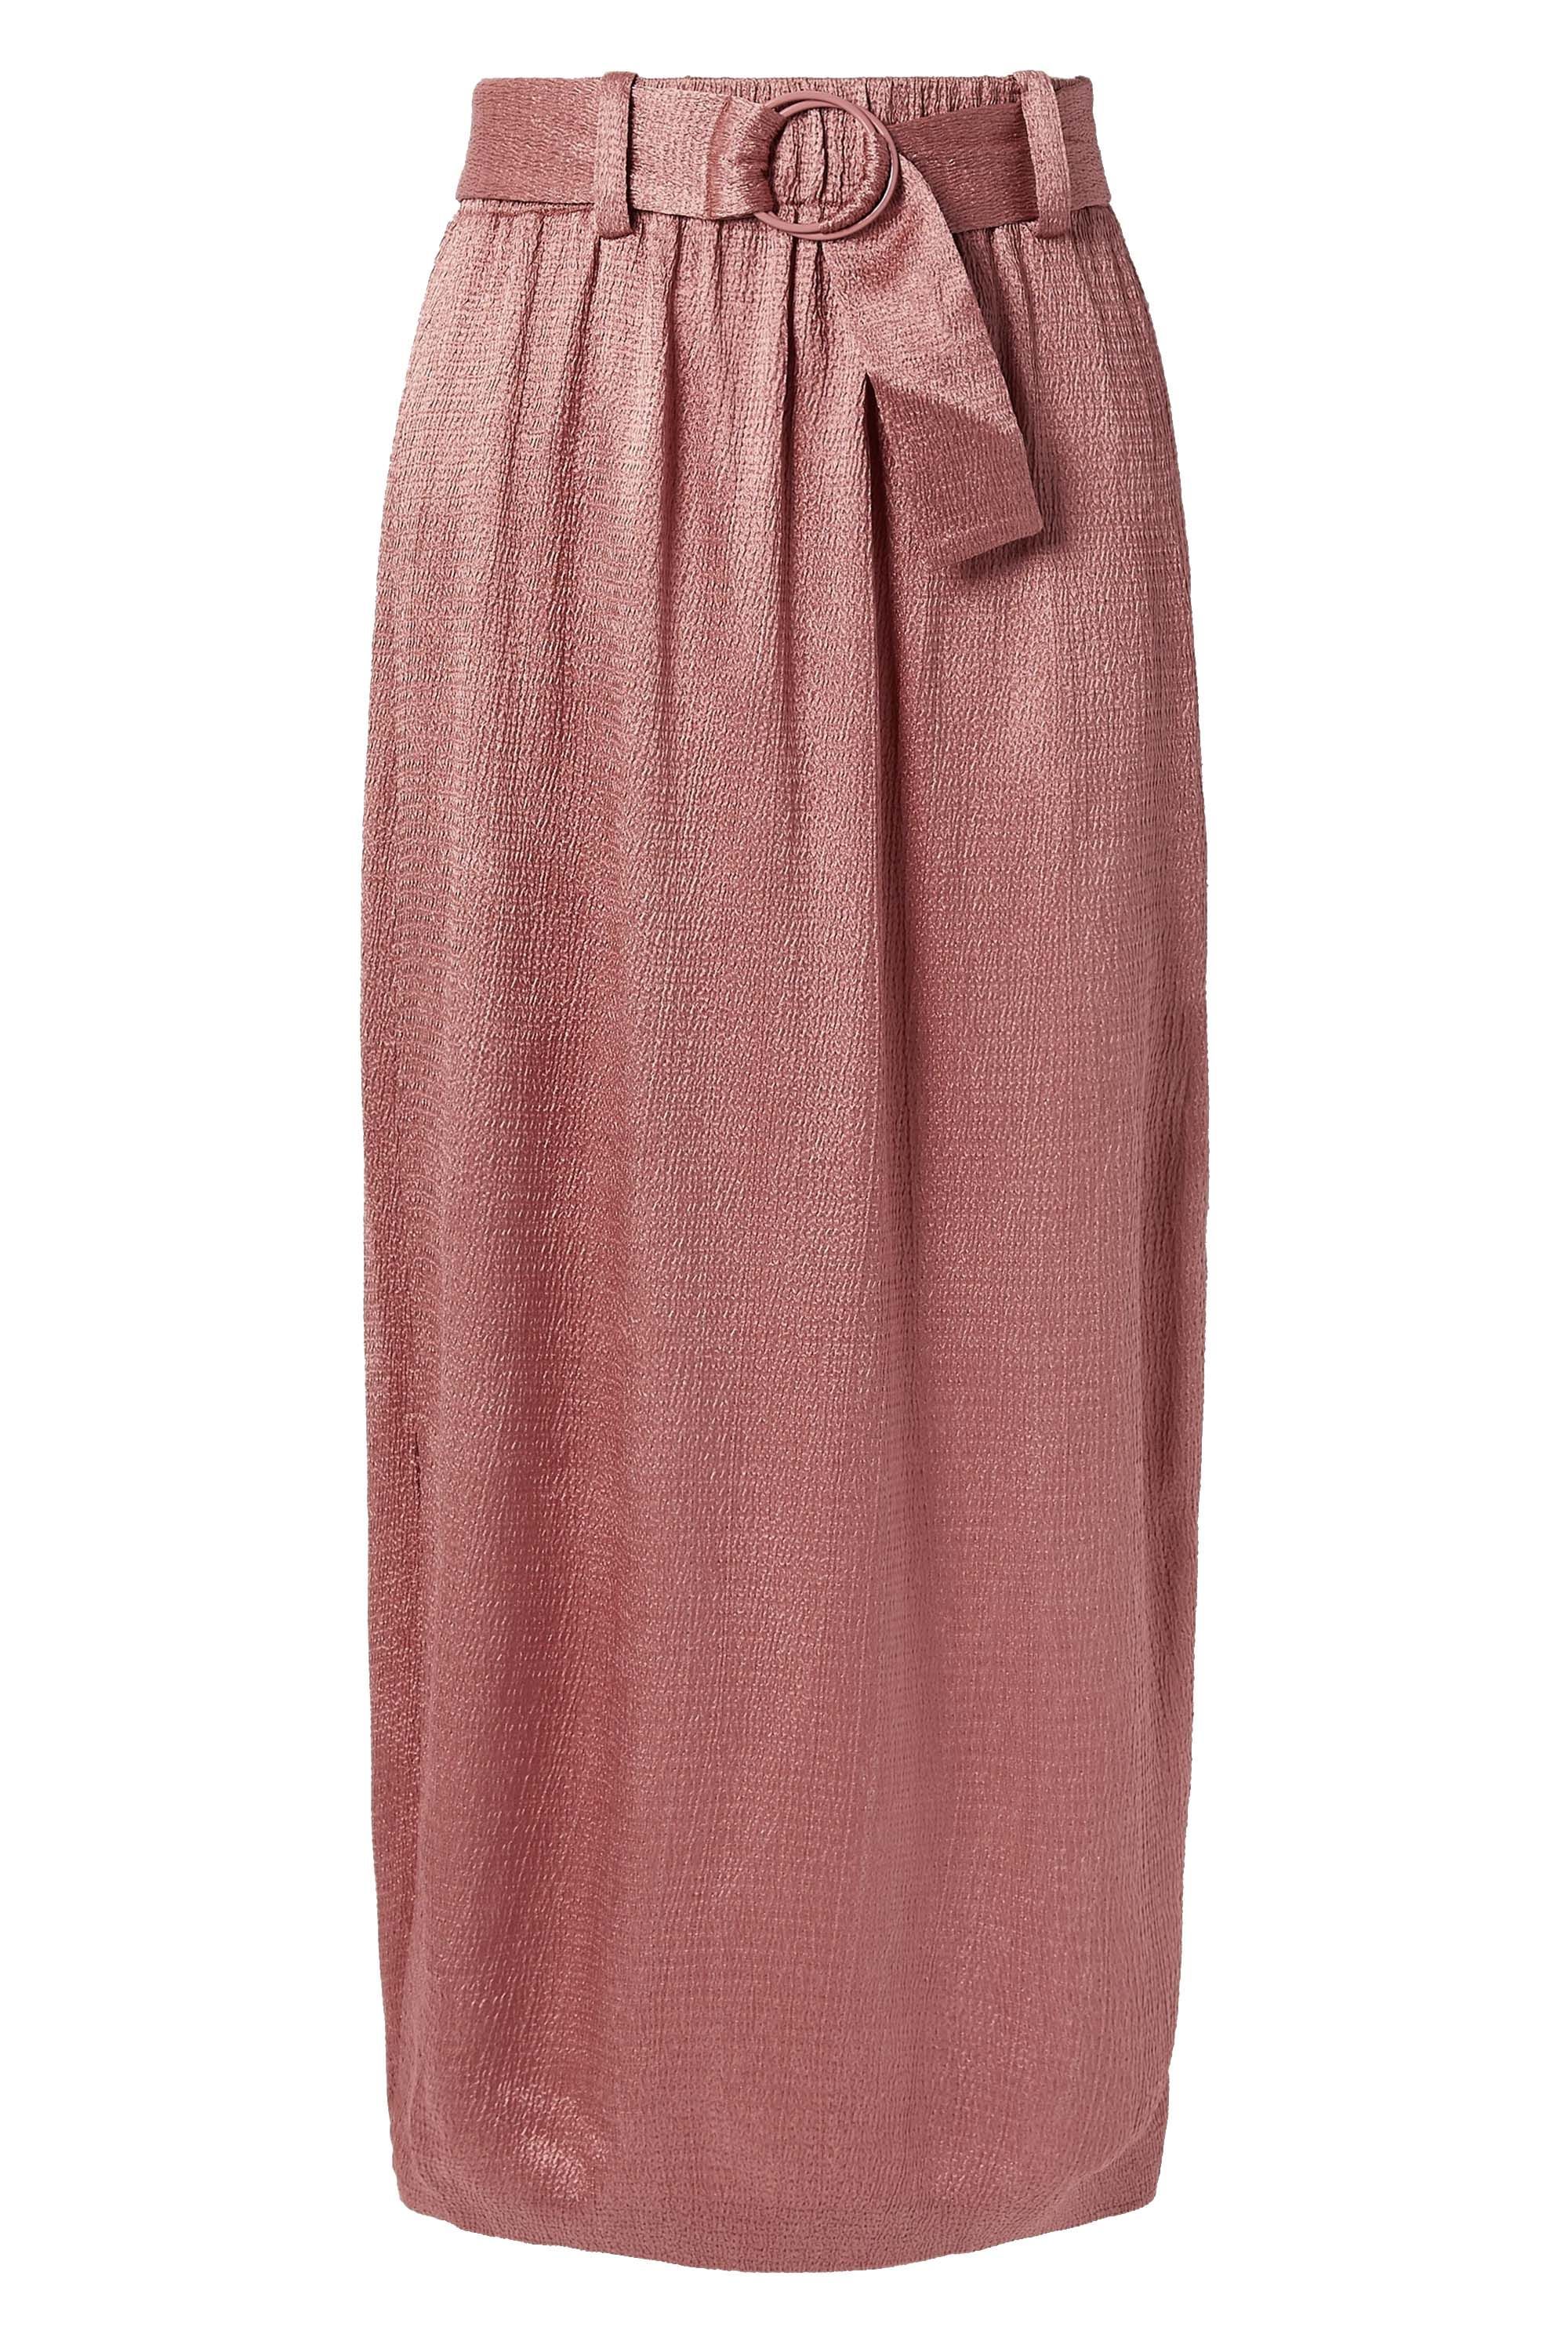 slip skirts to buy now – Silk skirts 